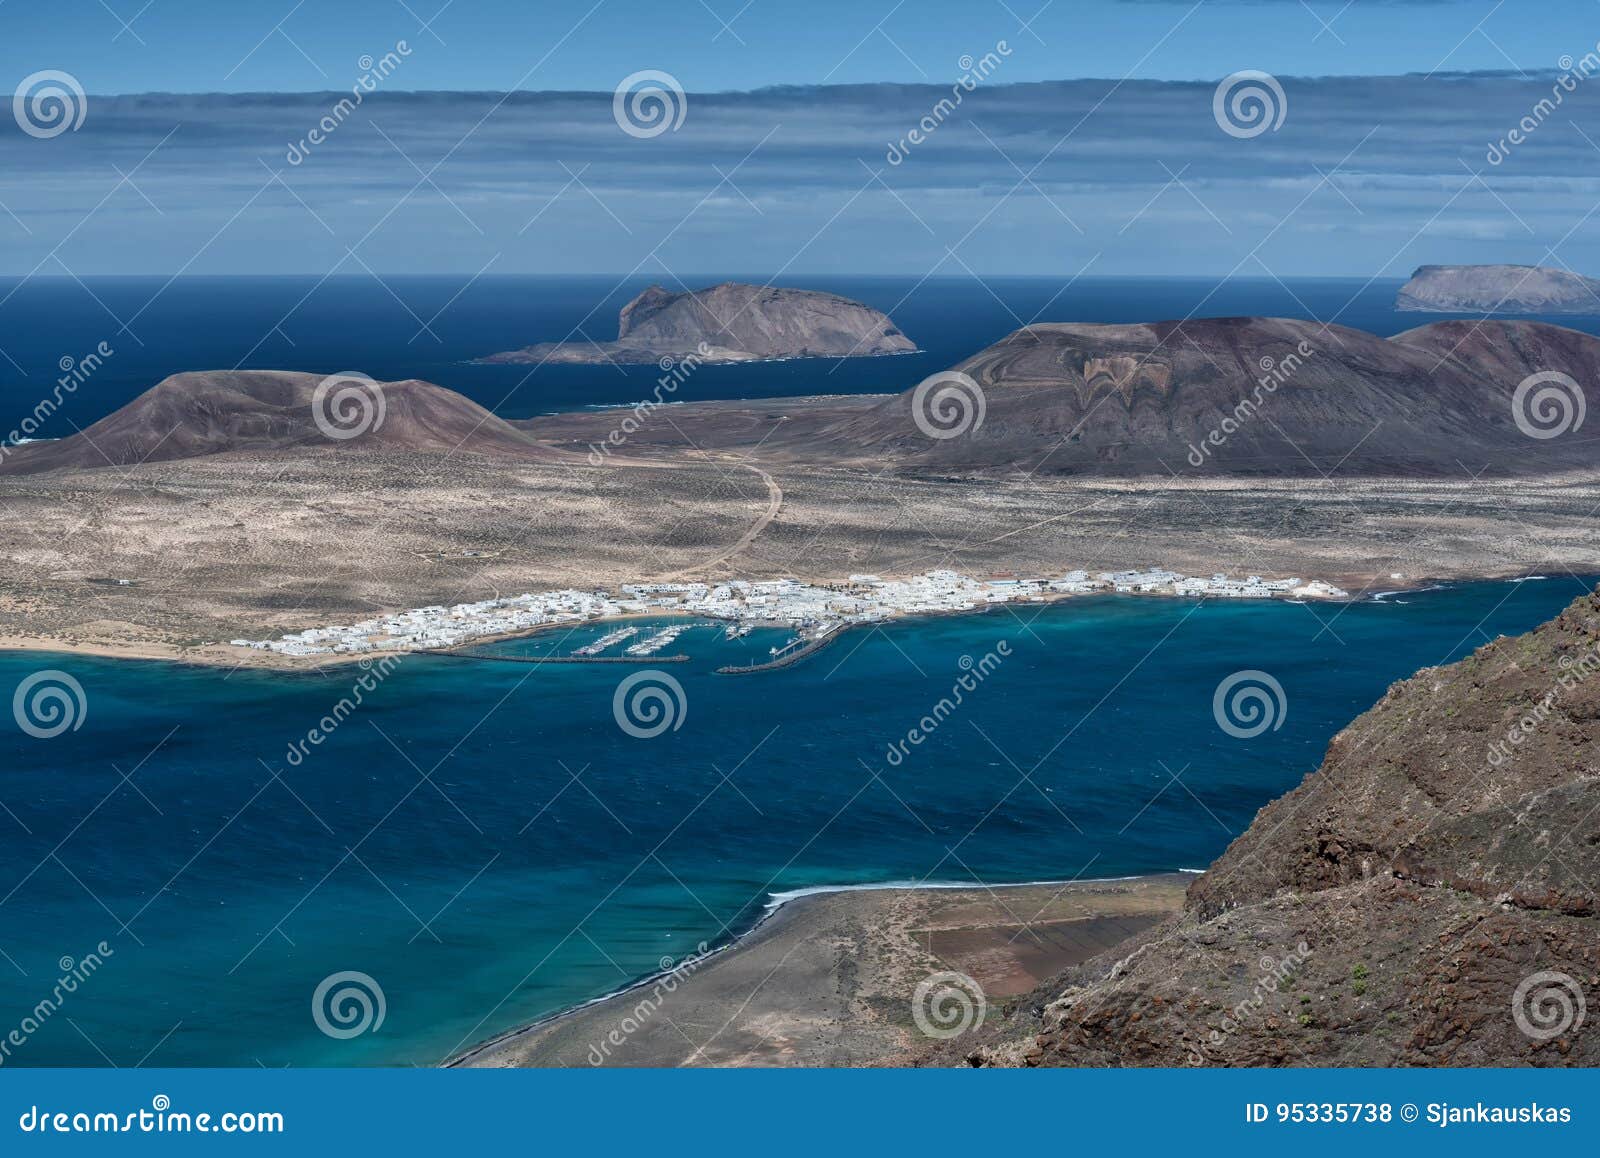 island of volcanoes, aerial view, lanzarote